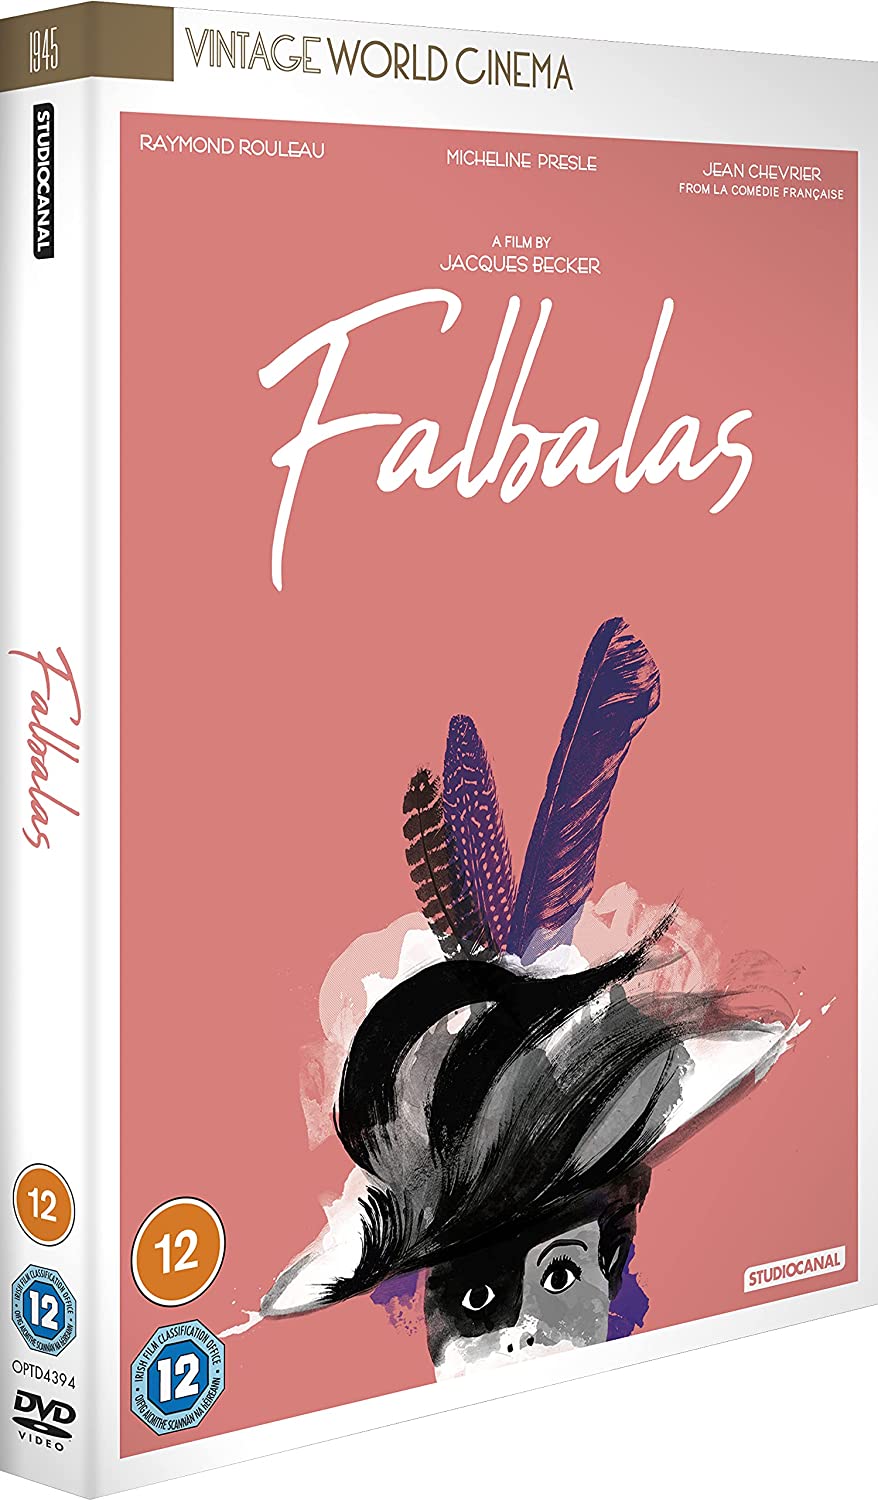 Falbalas (Vintage World Cinema) - Drama/Romance [DVD]